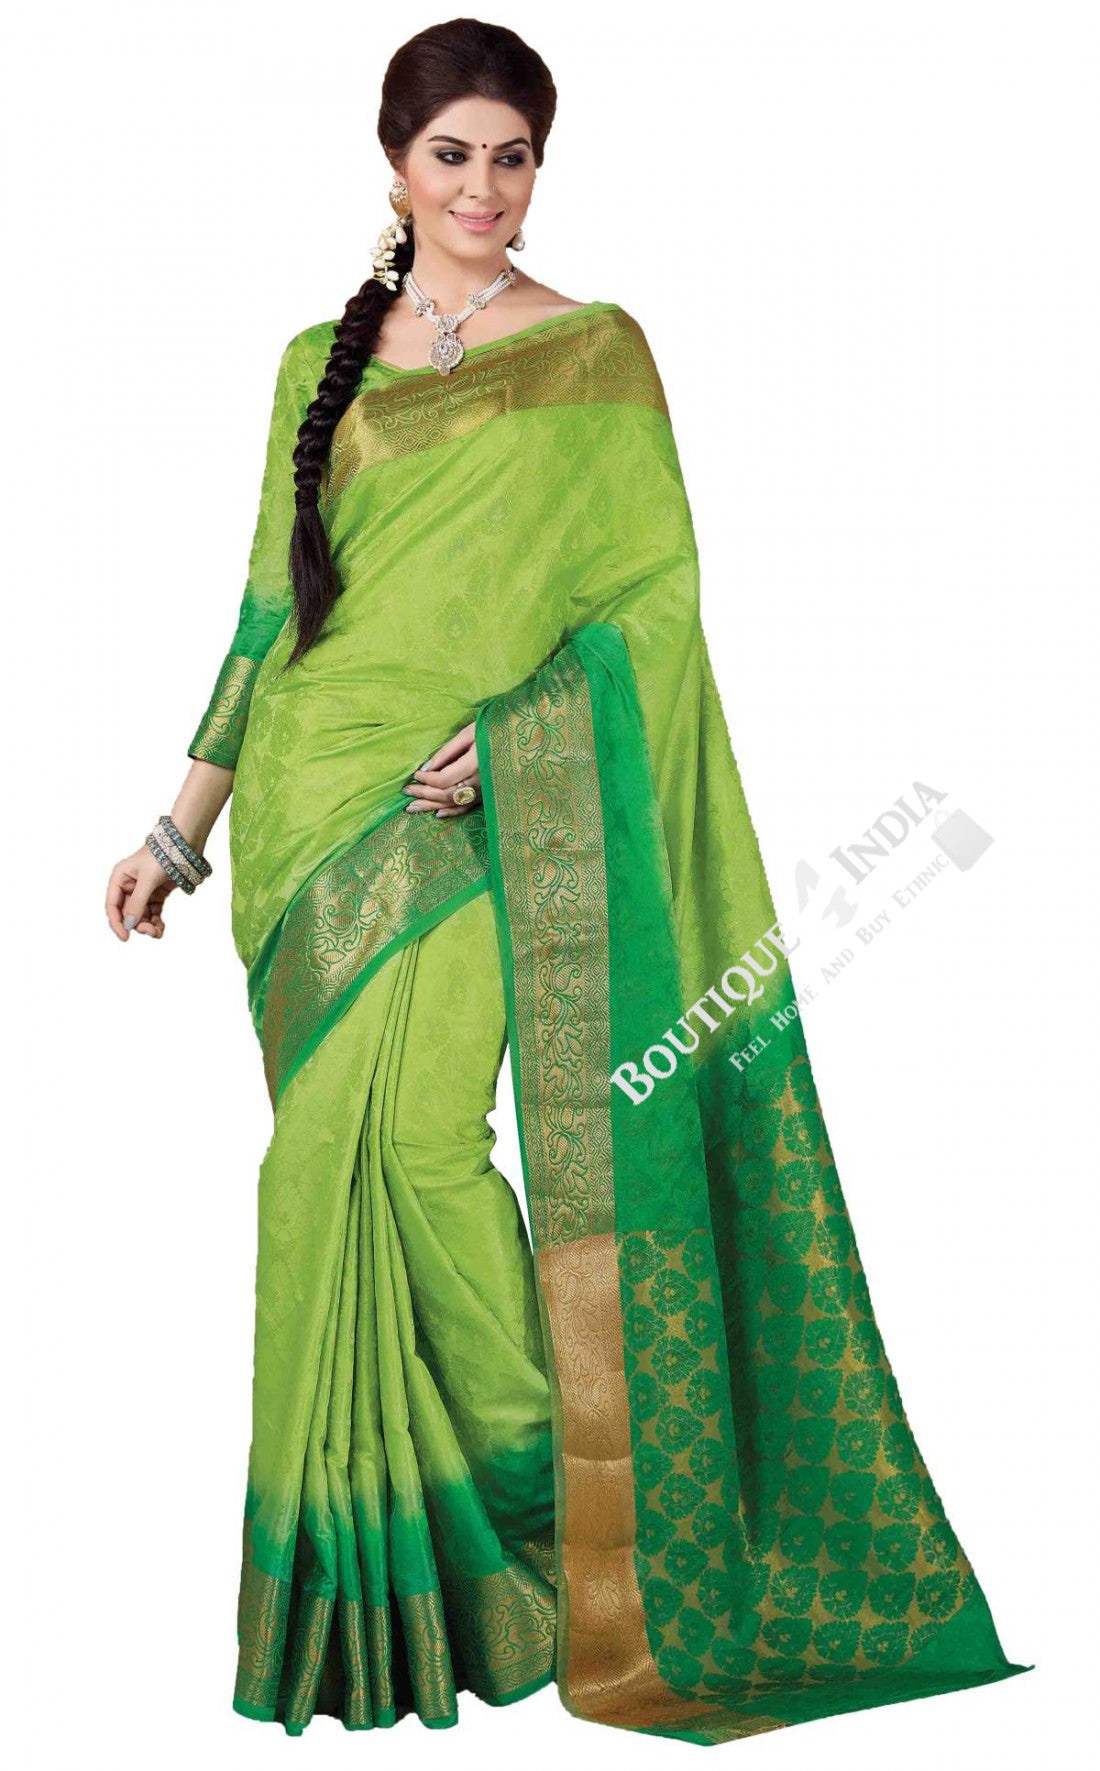 Jacquard Silk Saree in Light and Dark Green - Boutique4India Inc.